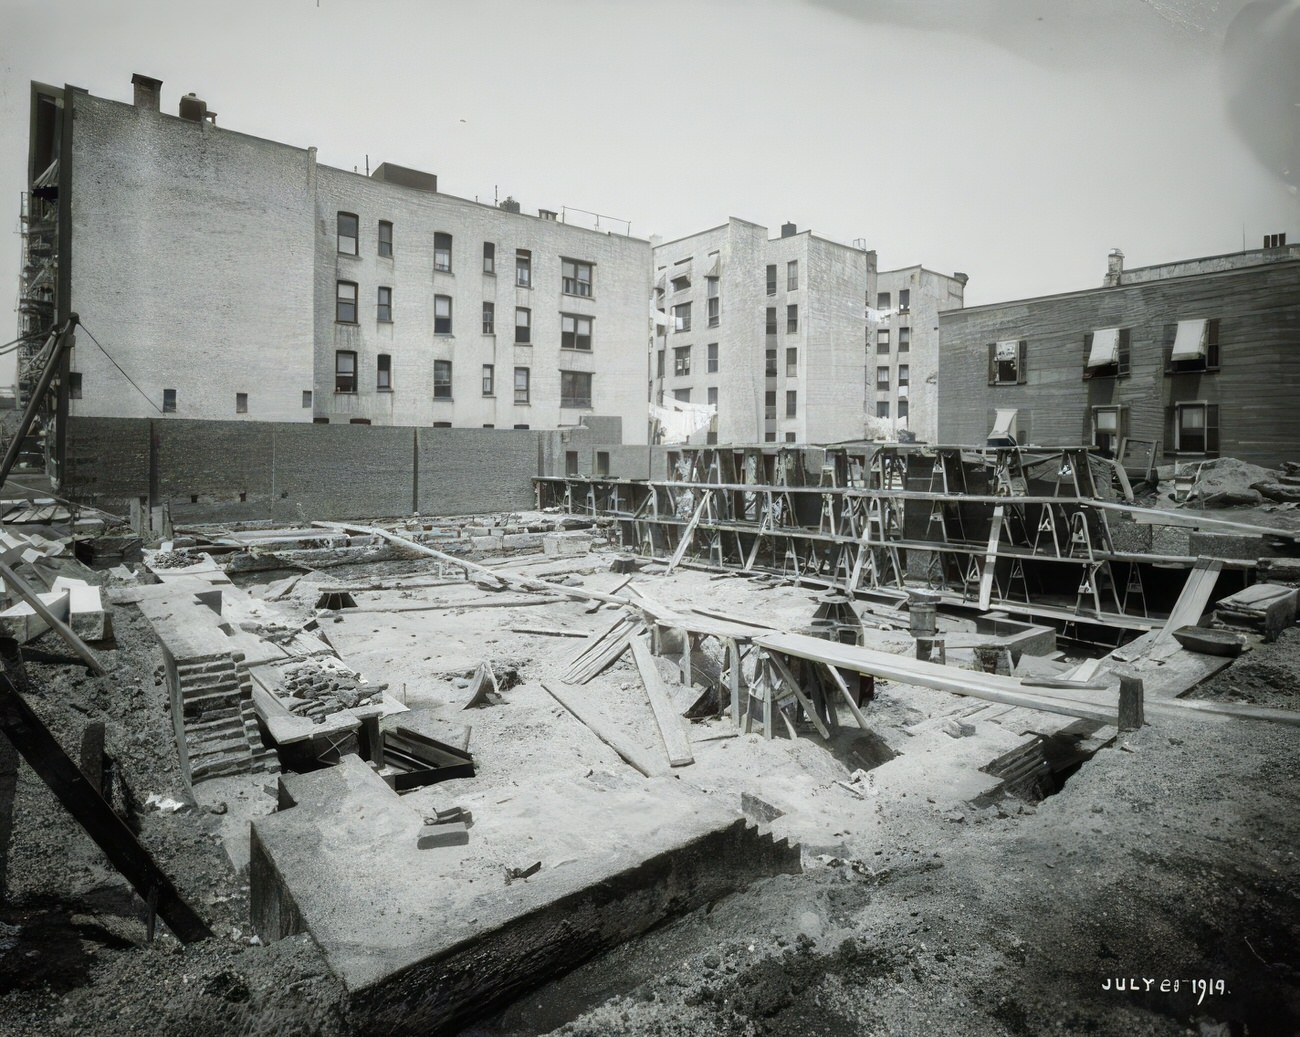 183Rd Street And Washington Avenue, Parochial School, Exterior Construction, July 1914.